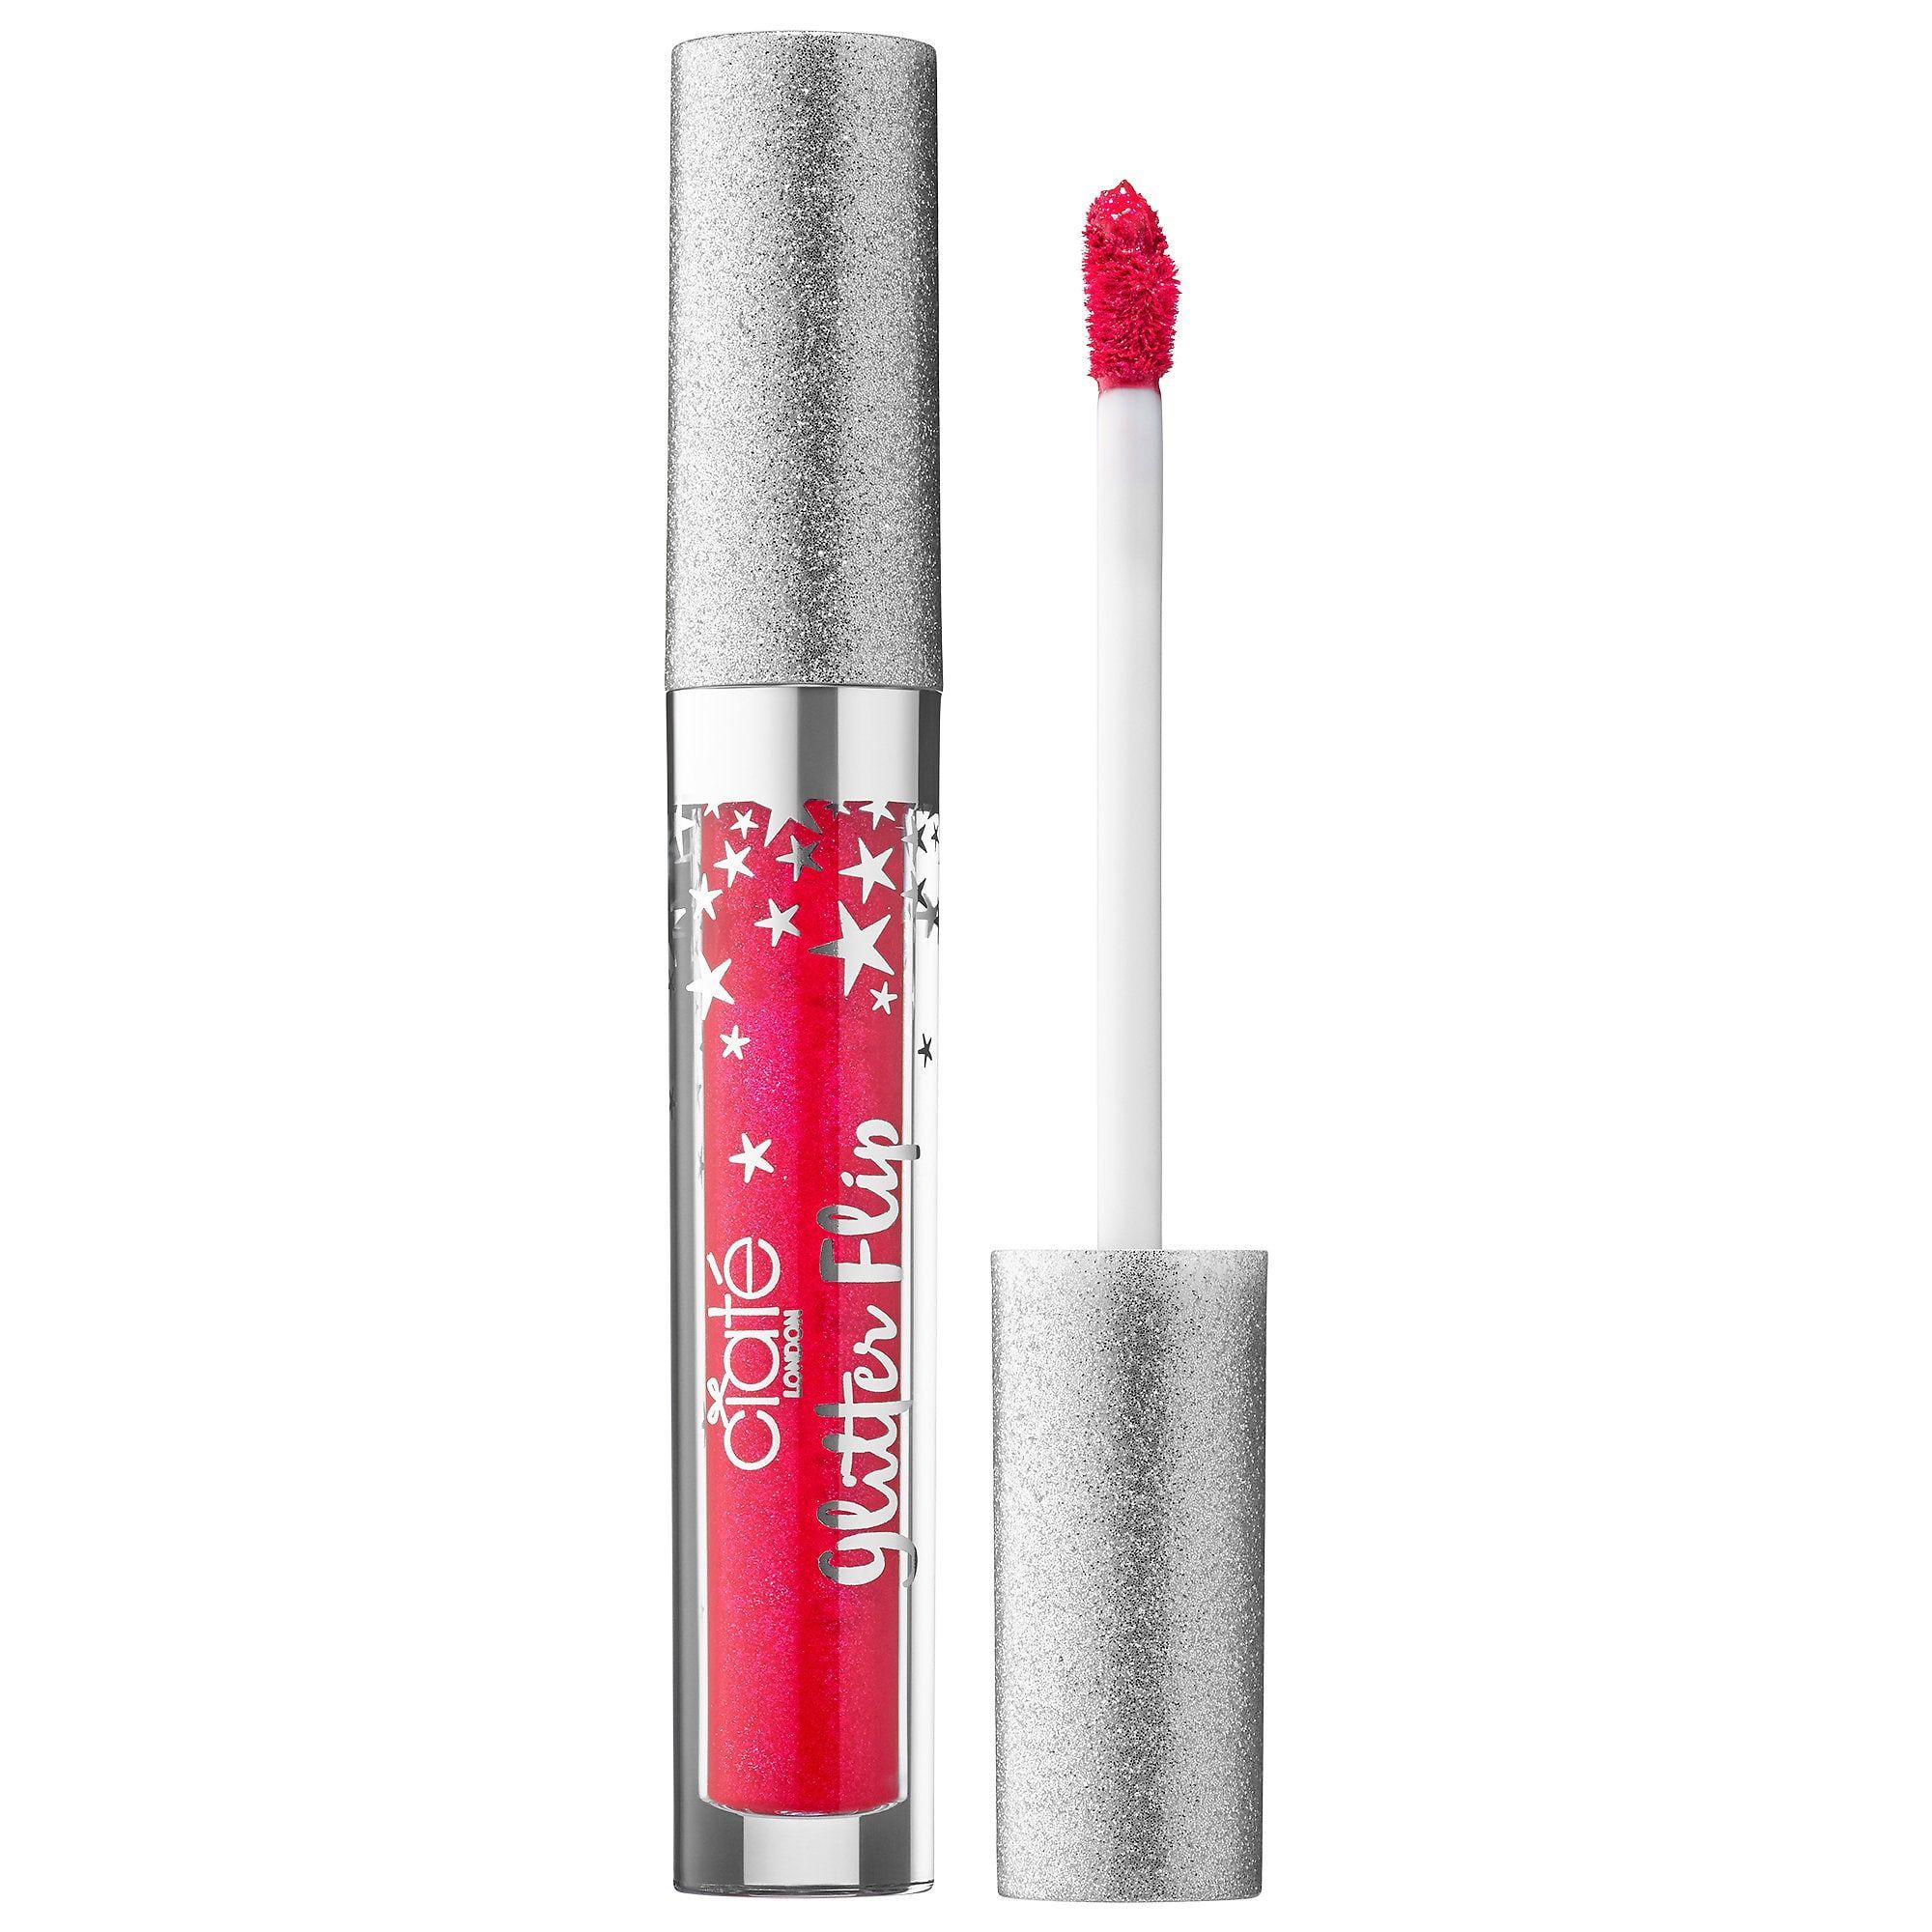 15 liquid lipsticks for people who hate liquid lipstick